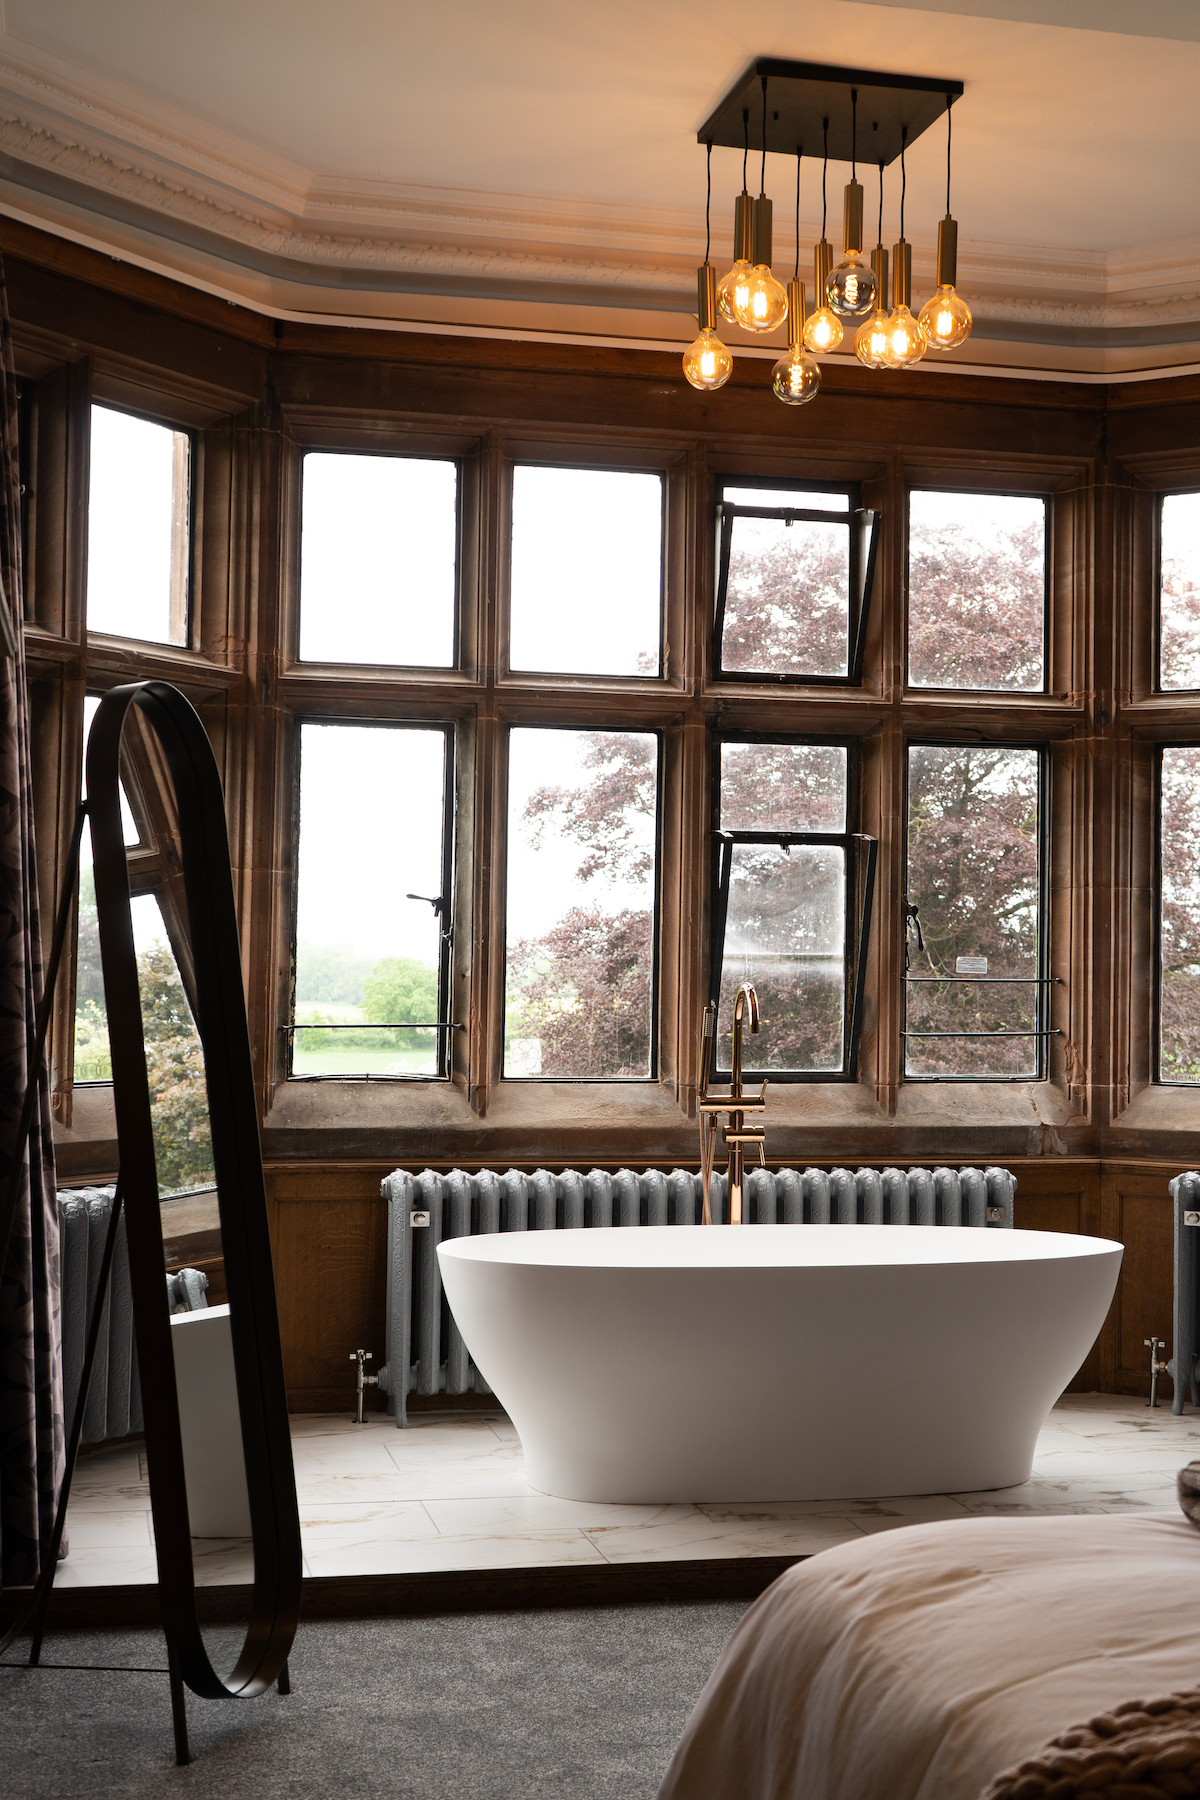 Standon Hall - traditional bath with heritage interiors